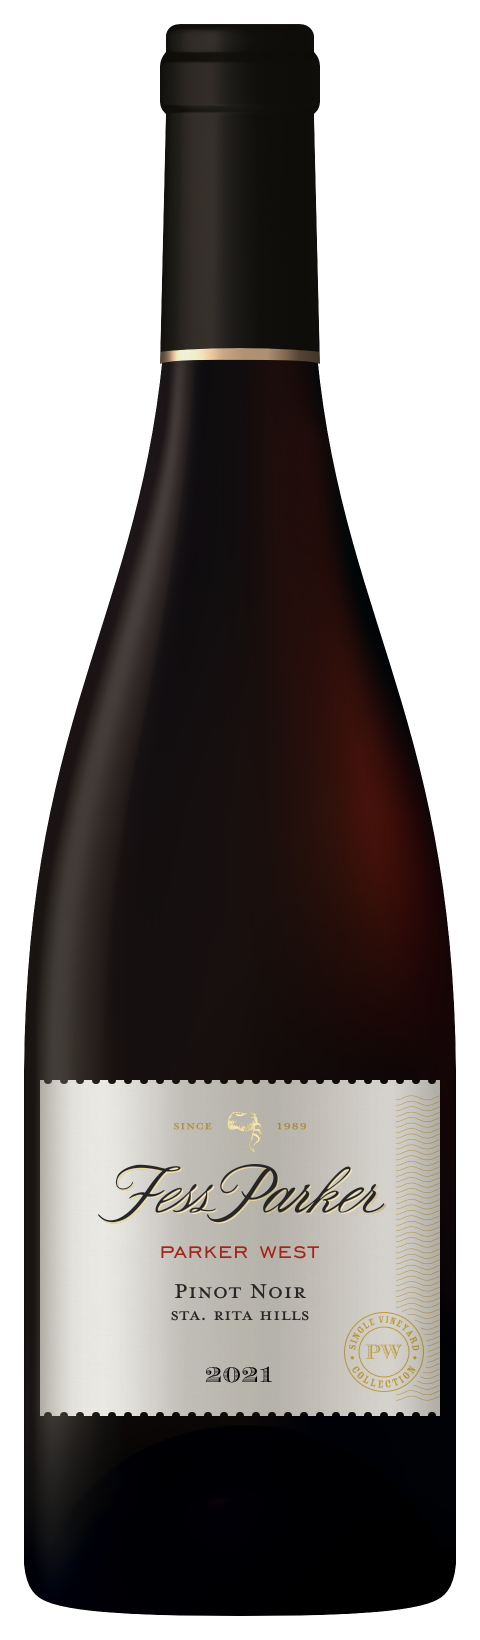 Bottle shot of Parker West Pinot Noir